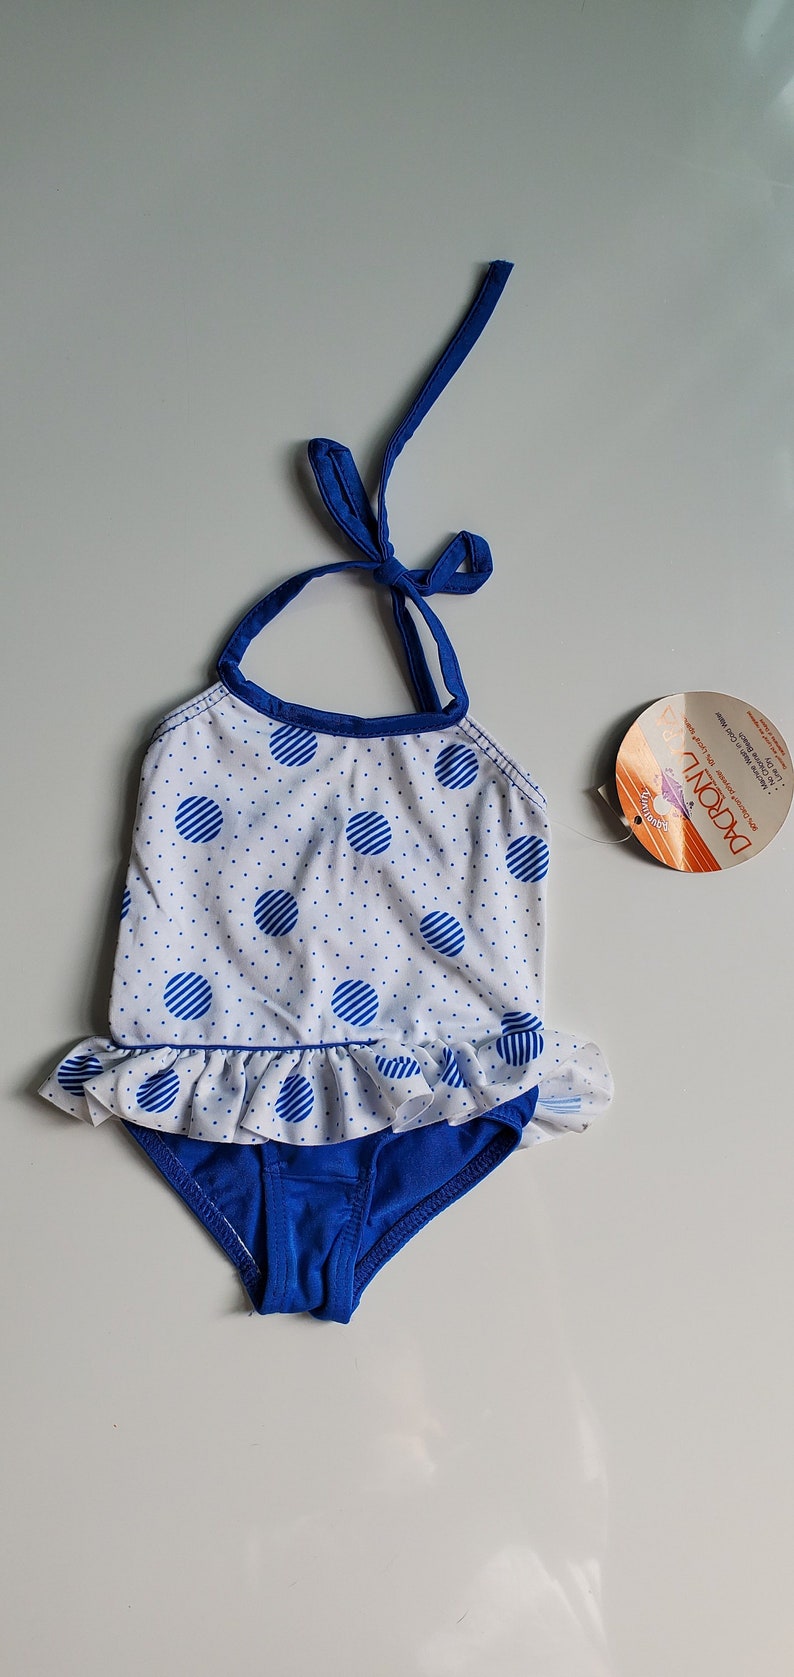 Vintage 1970s Girl's Infant Swimsuit Vintage Deadstock NWT Girls Infant Aquativity Swimsuit One Piece Blue White Polka Dot Ruffle ILGWU image 2